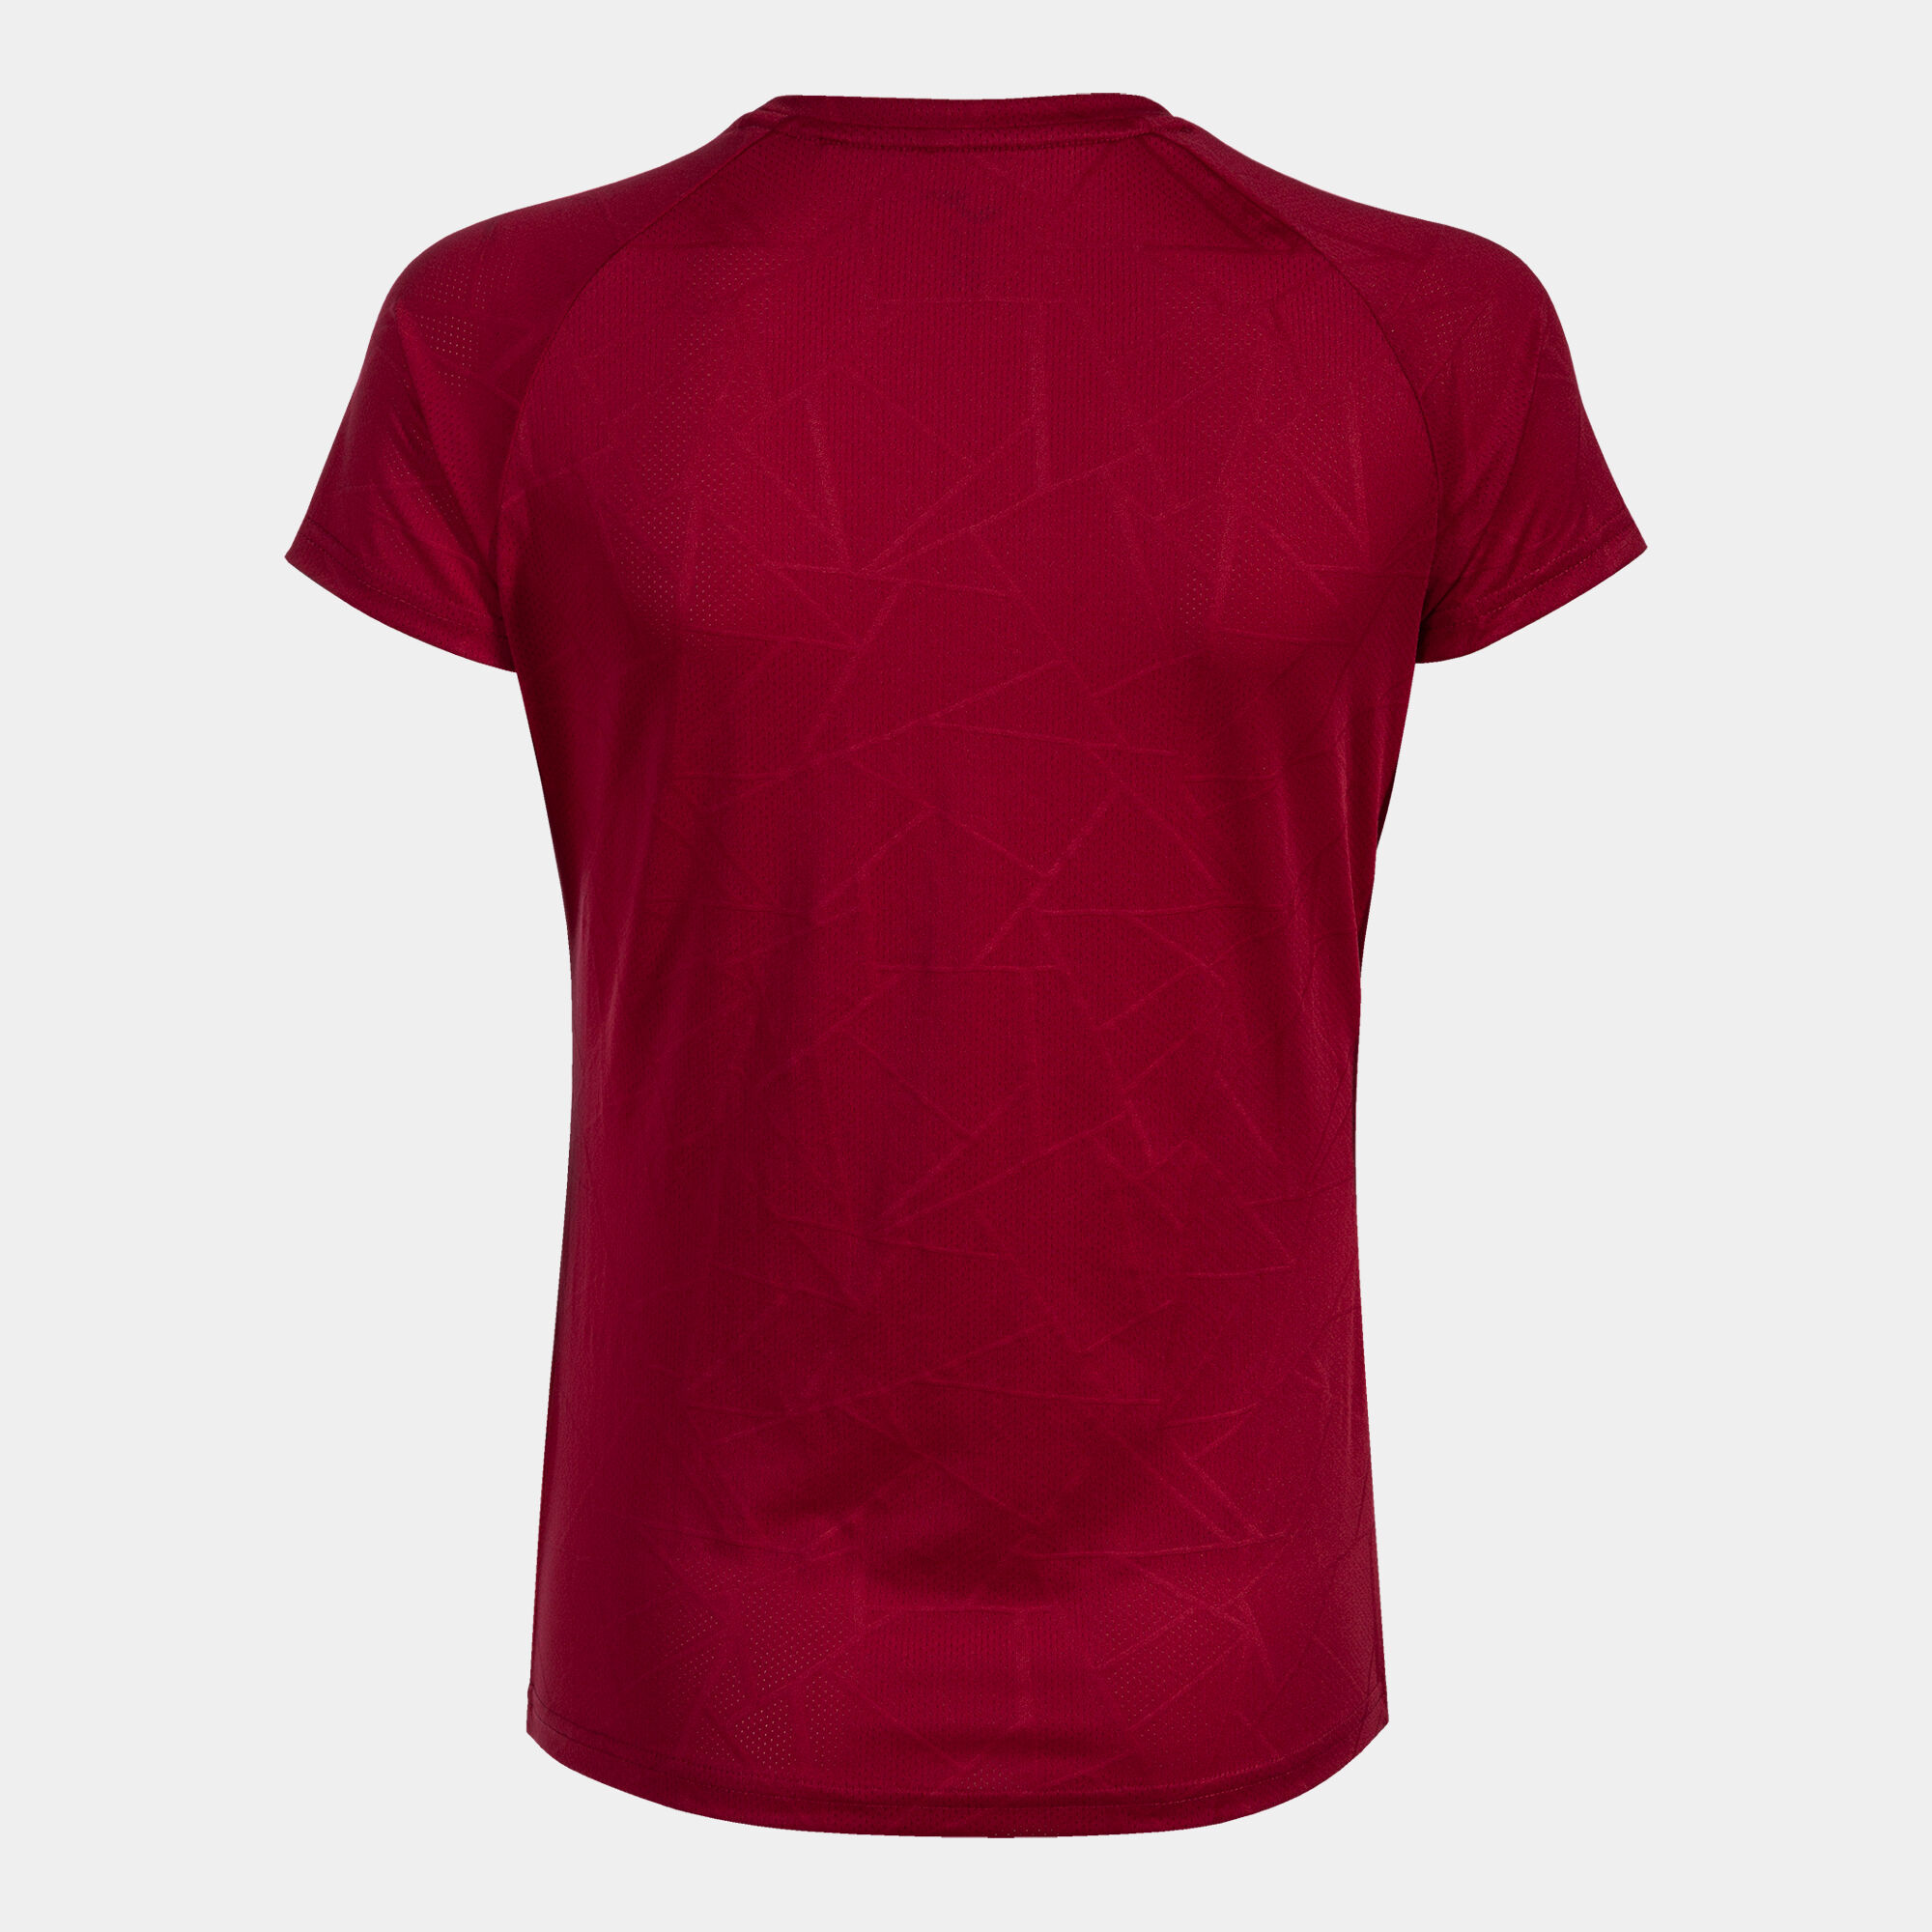 Camiseta manga corta mujer Elite IX rojo